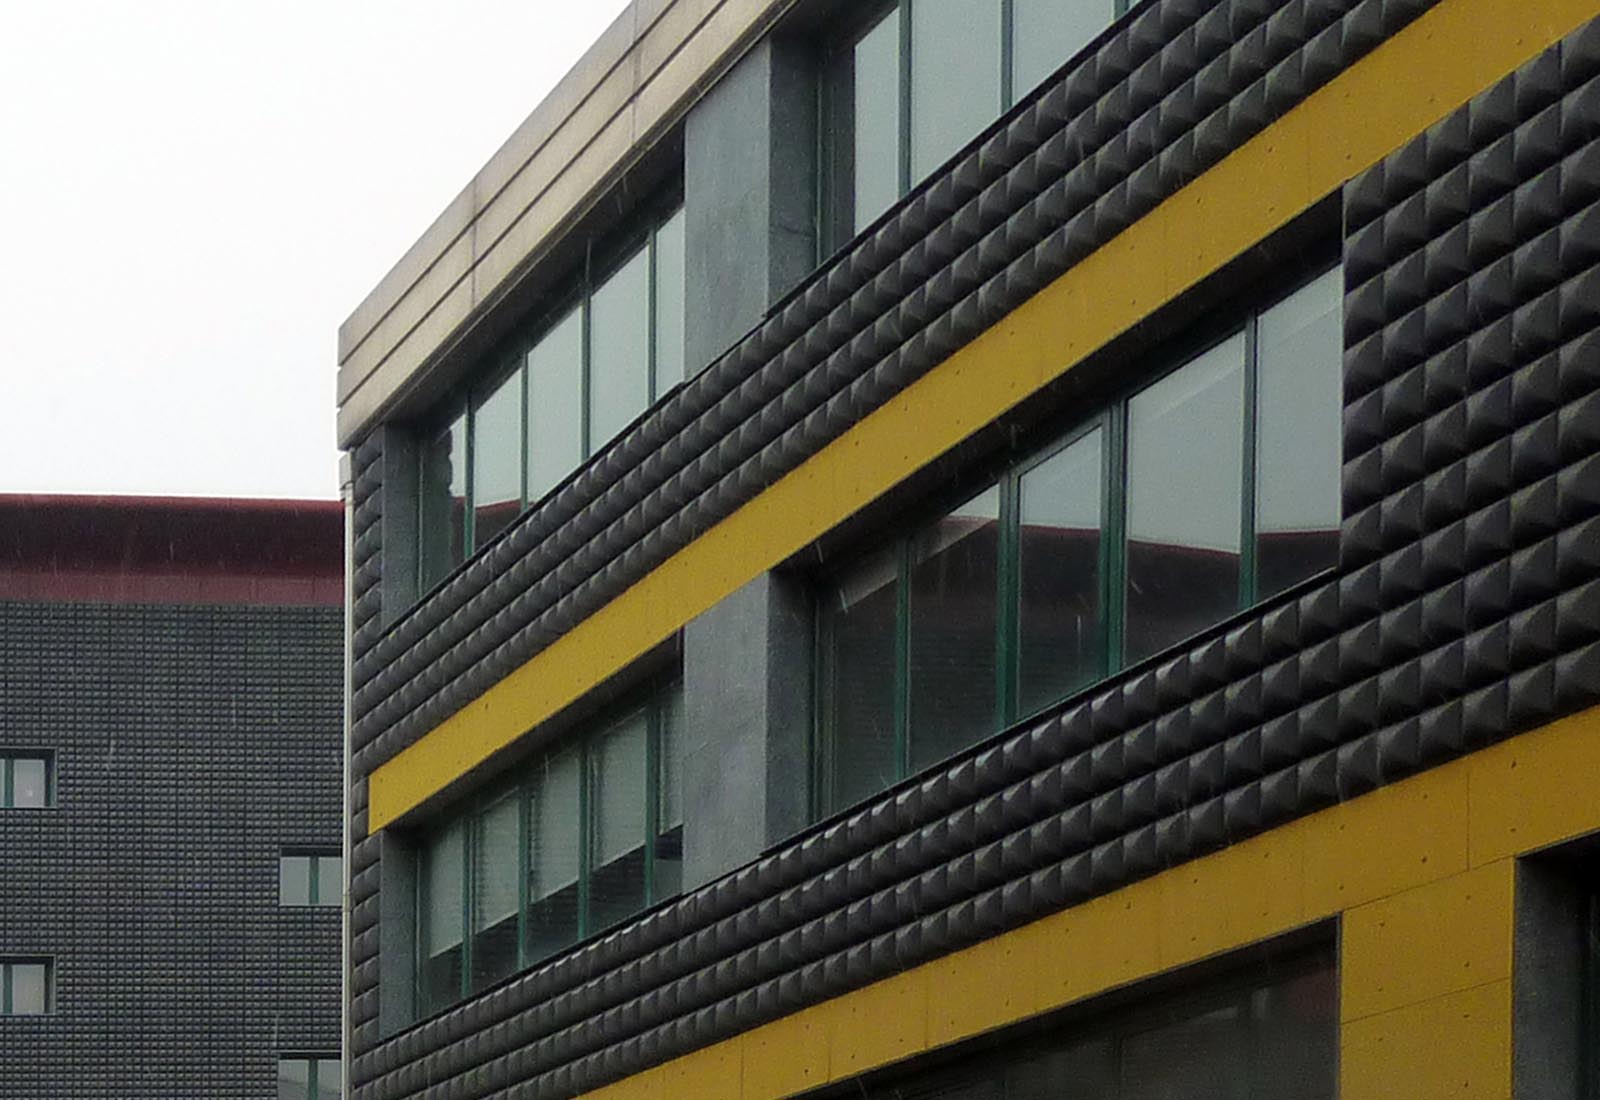 Building 25 Politecnico di Milano - The west facade